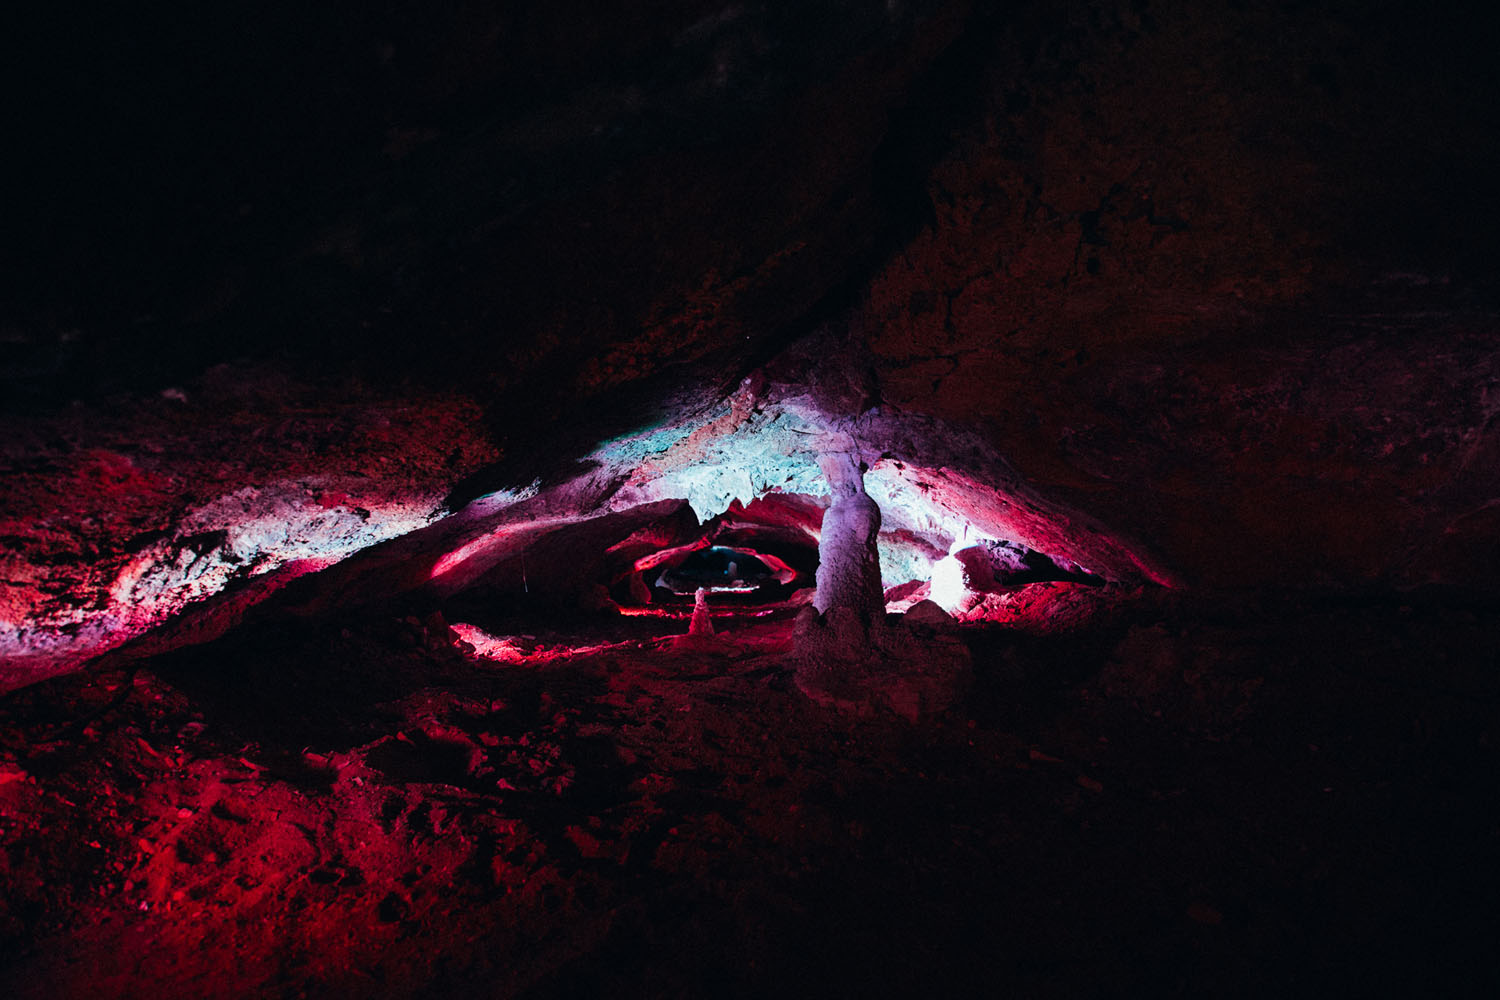 Cave in Cova d'en Xoroi, Menorca